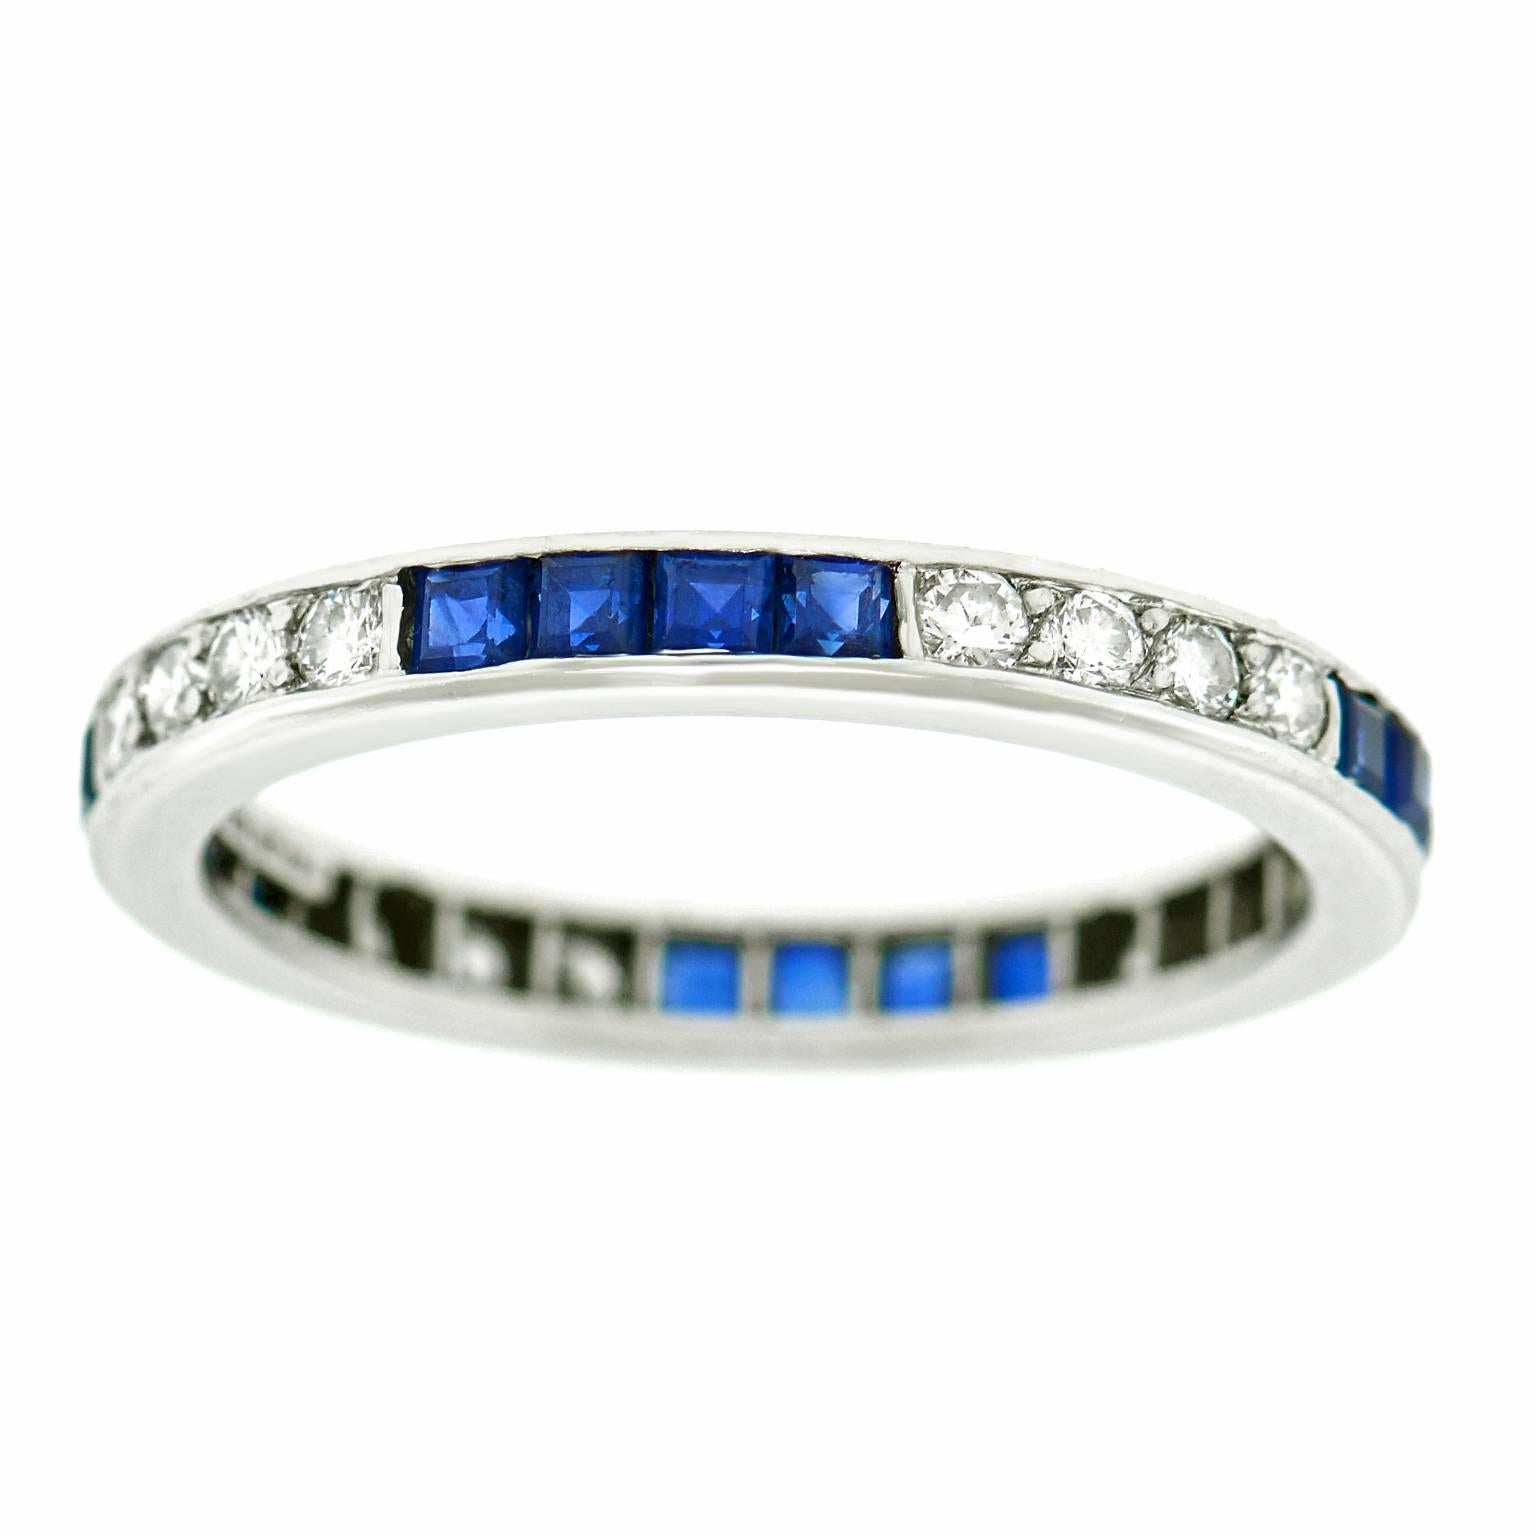 Tiffany & Co. Art Deco Sapphire Diamond Platinum Eternity Band Ring